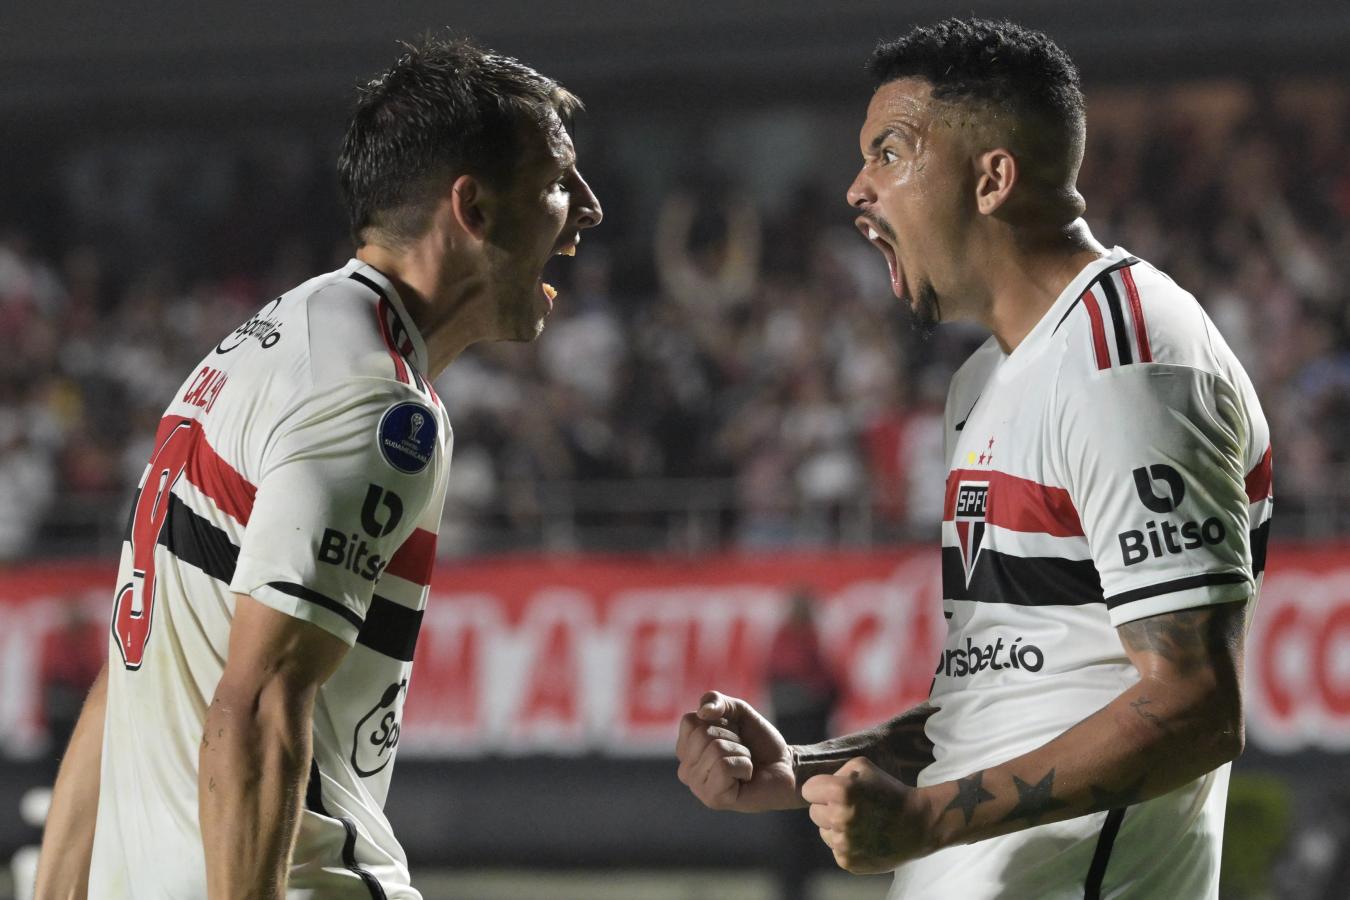 FINAL: São Paulo 2 - San Lorenzo 0 | El Gráfico